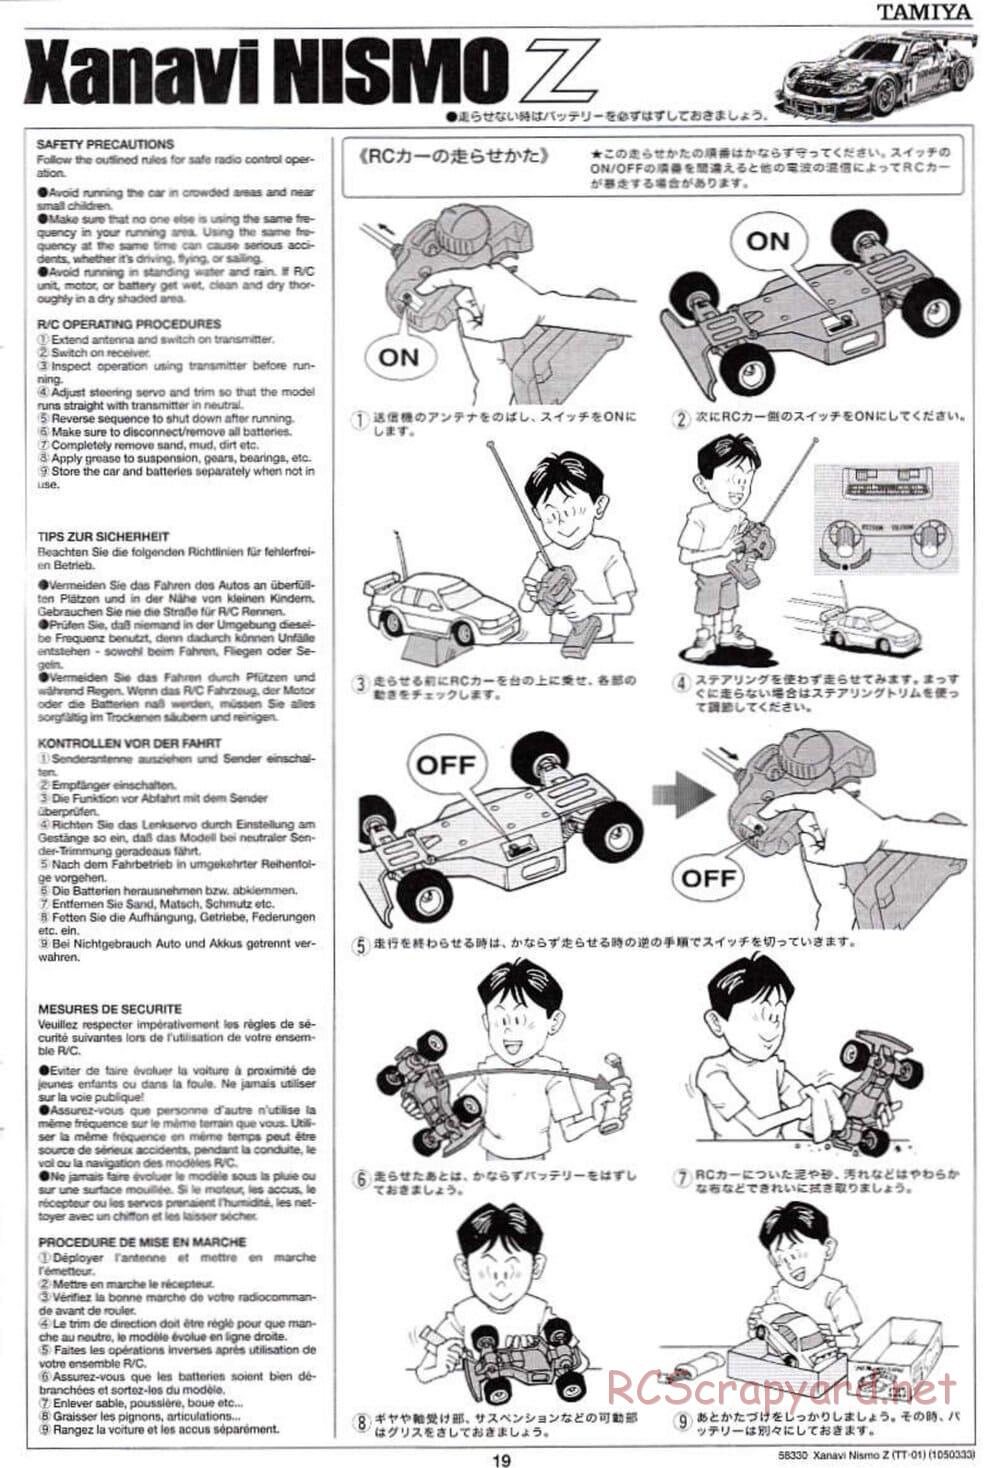 Tamiya - Xanavi Nismo Z - TT-01 Chassis - Manual - Page 19